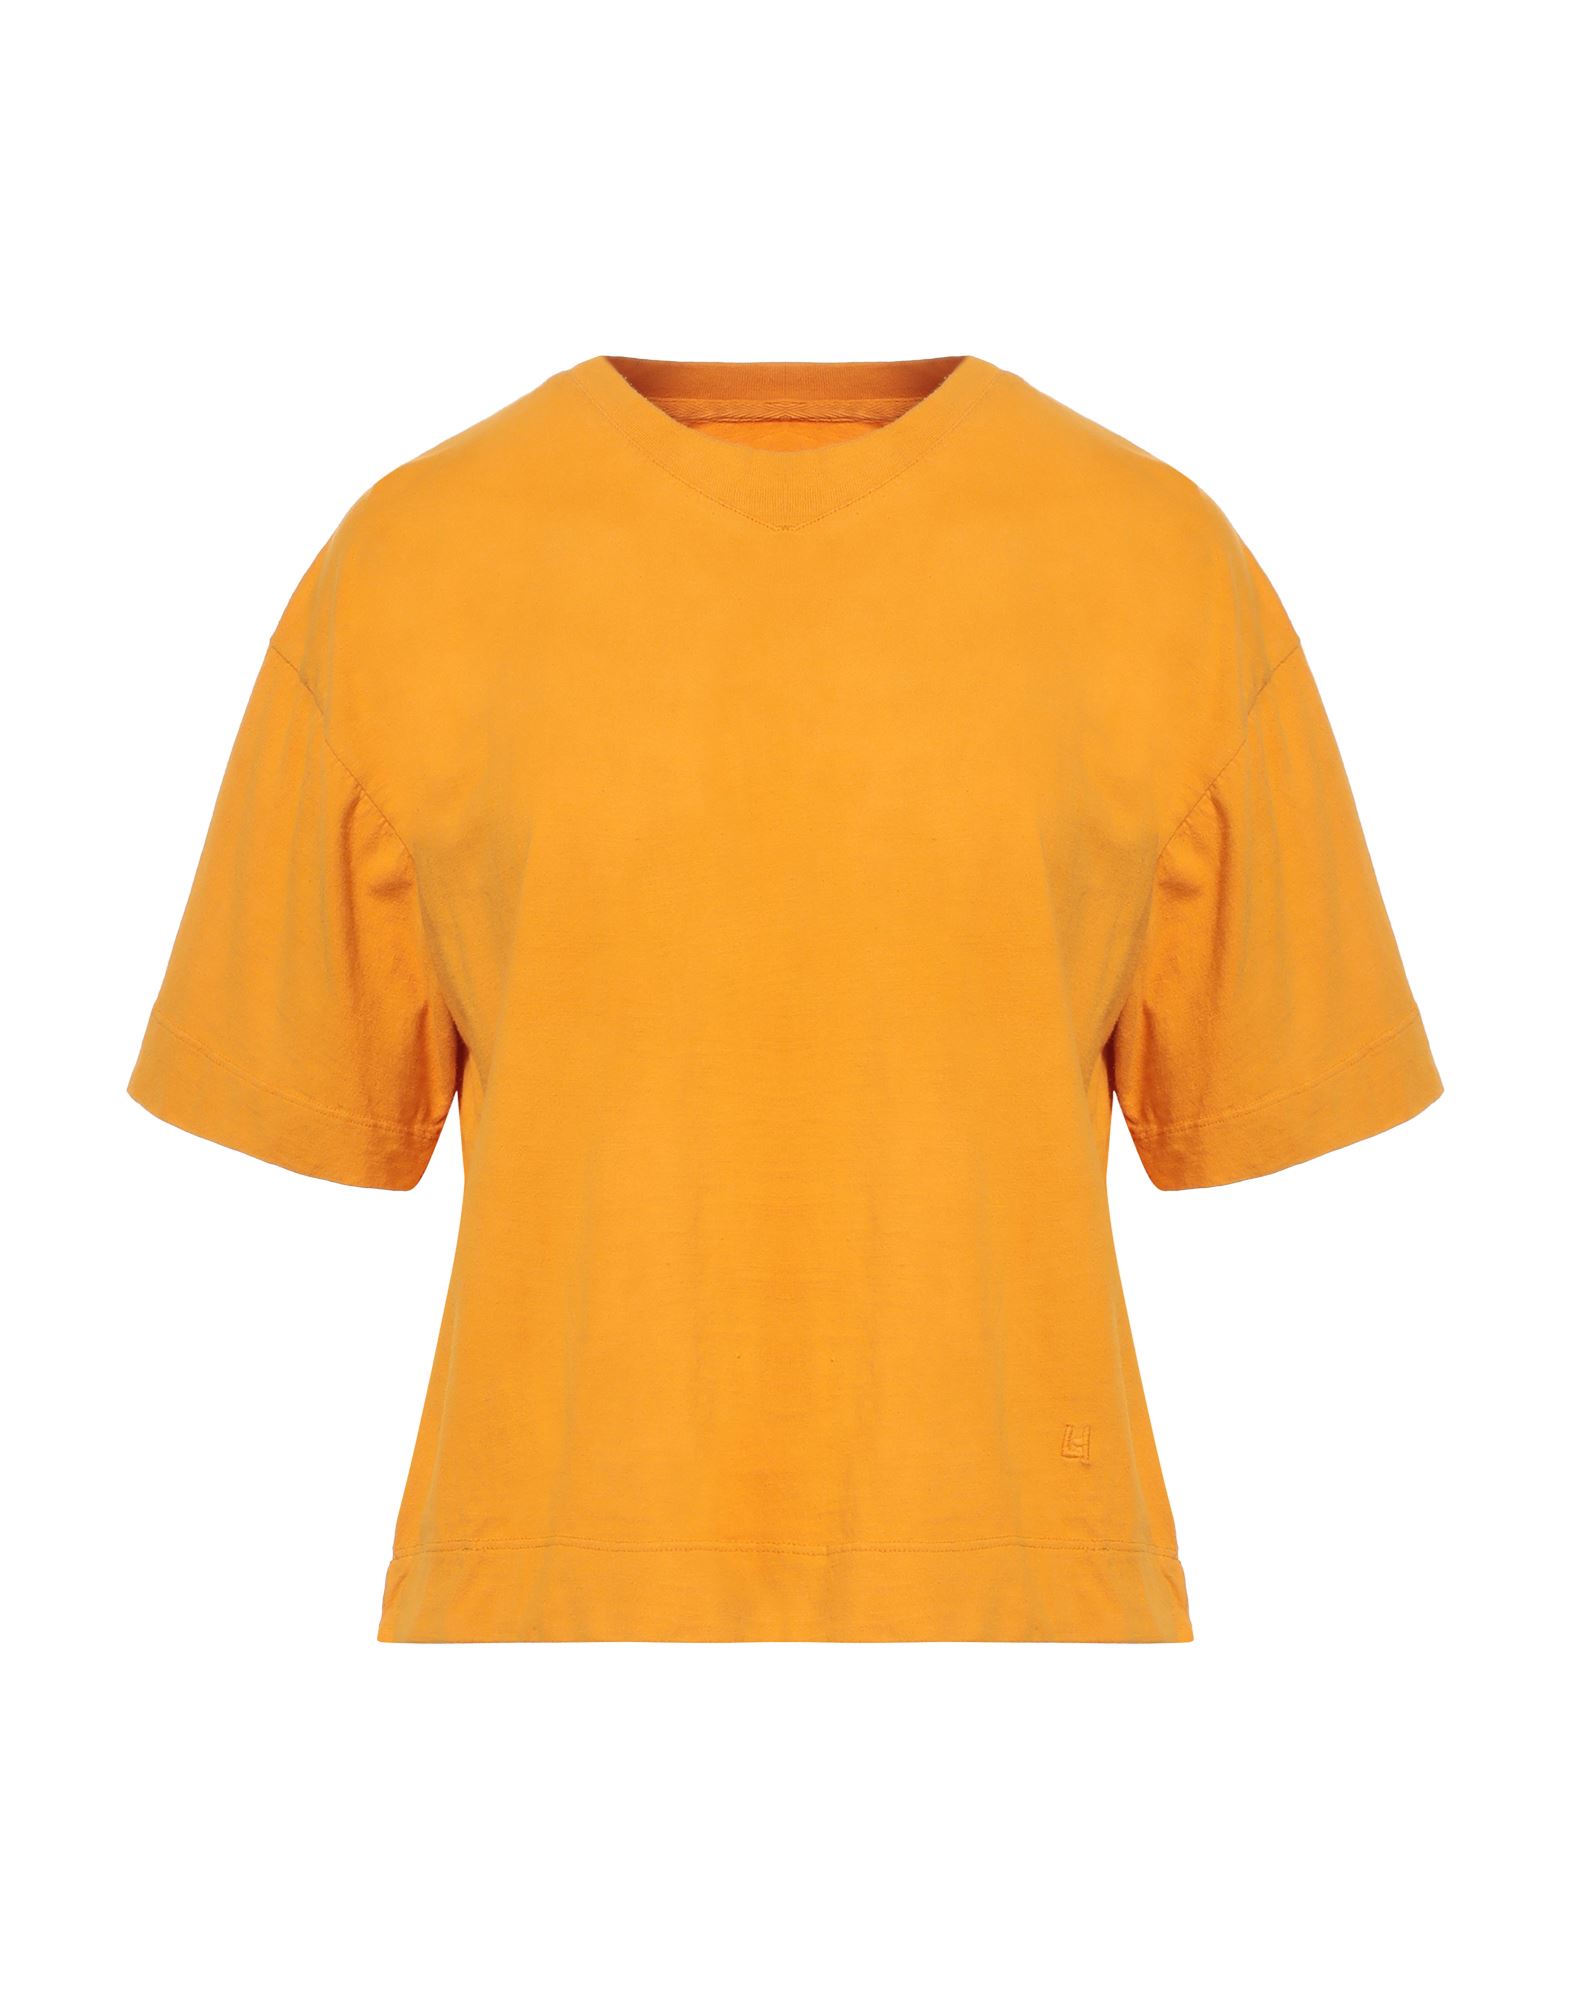 LEON & HARPER T-shirts Damen Mandarine von LEON & HARPER